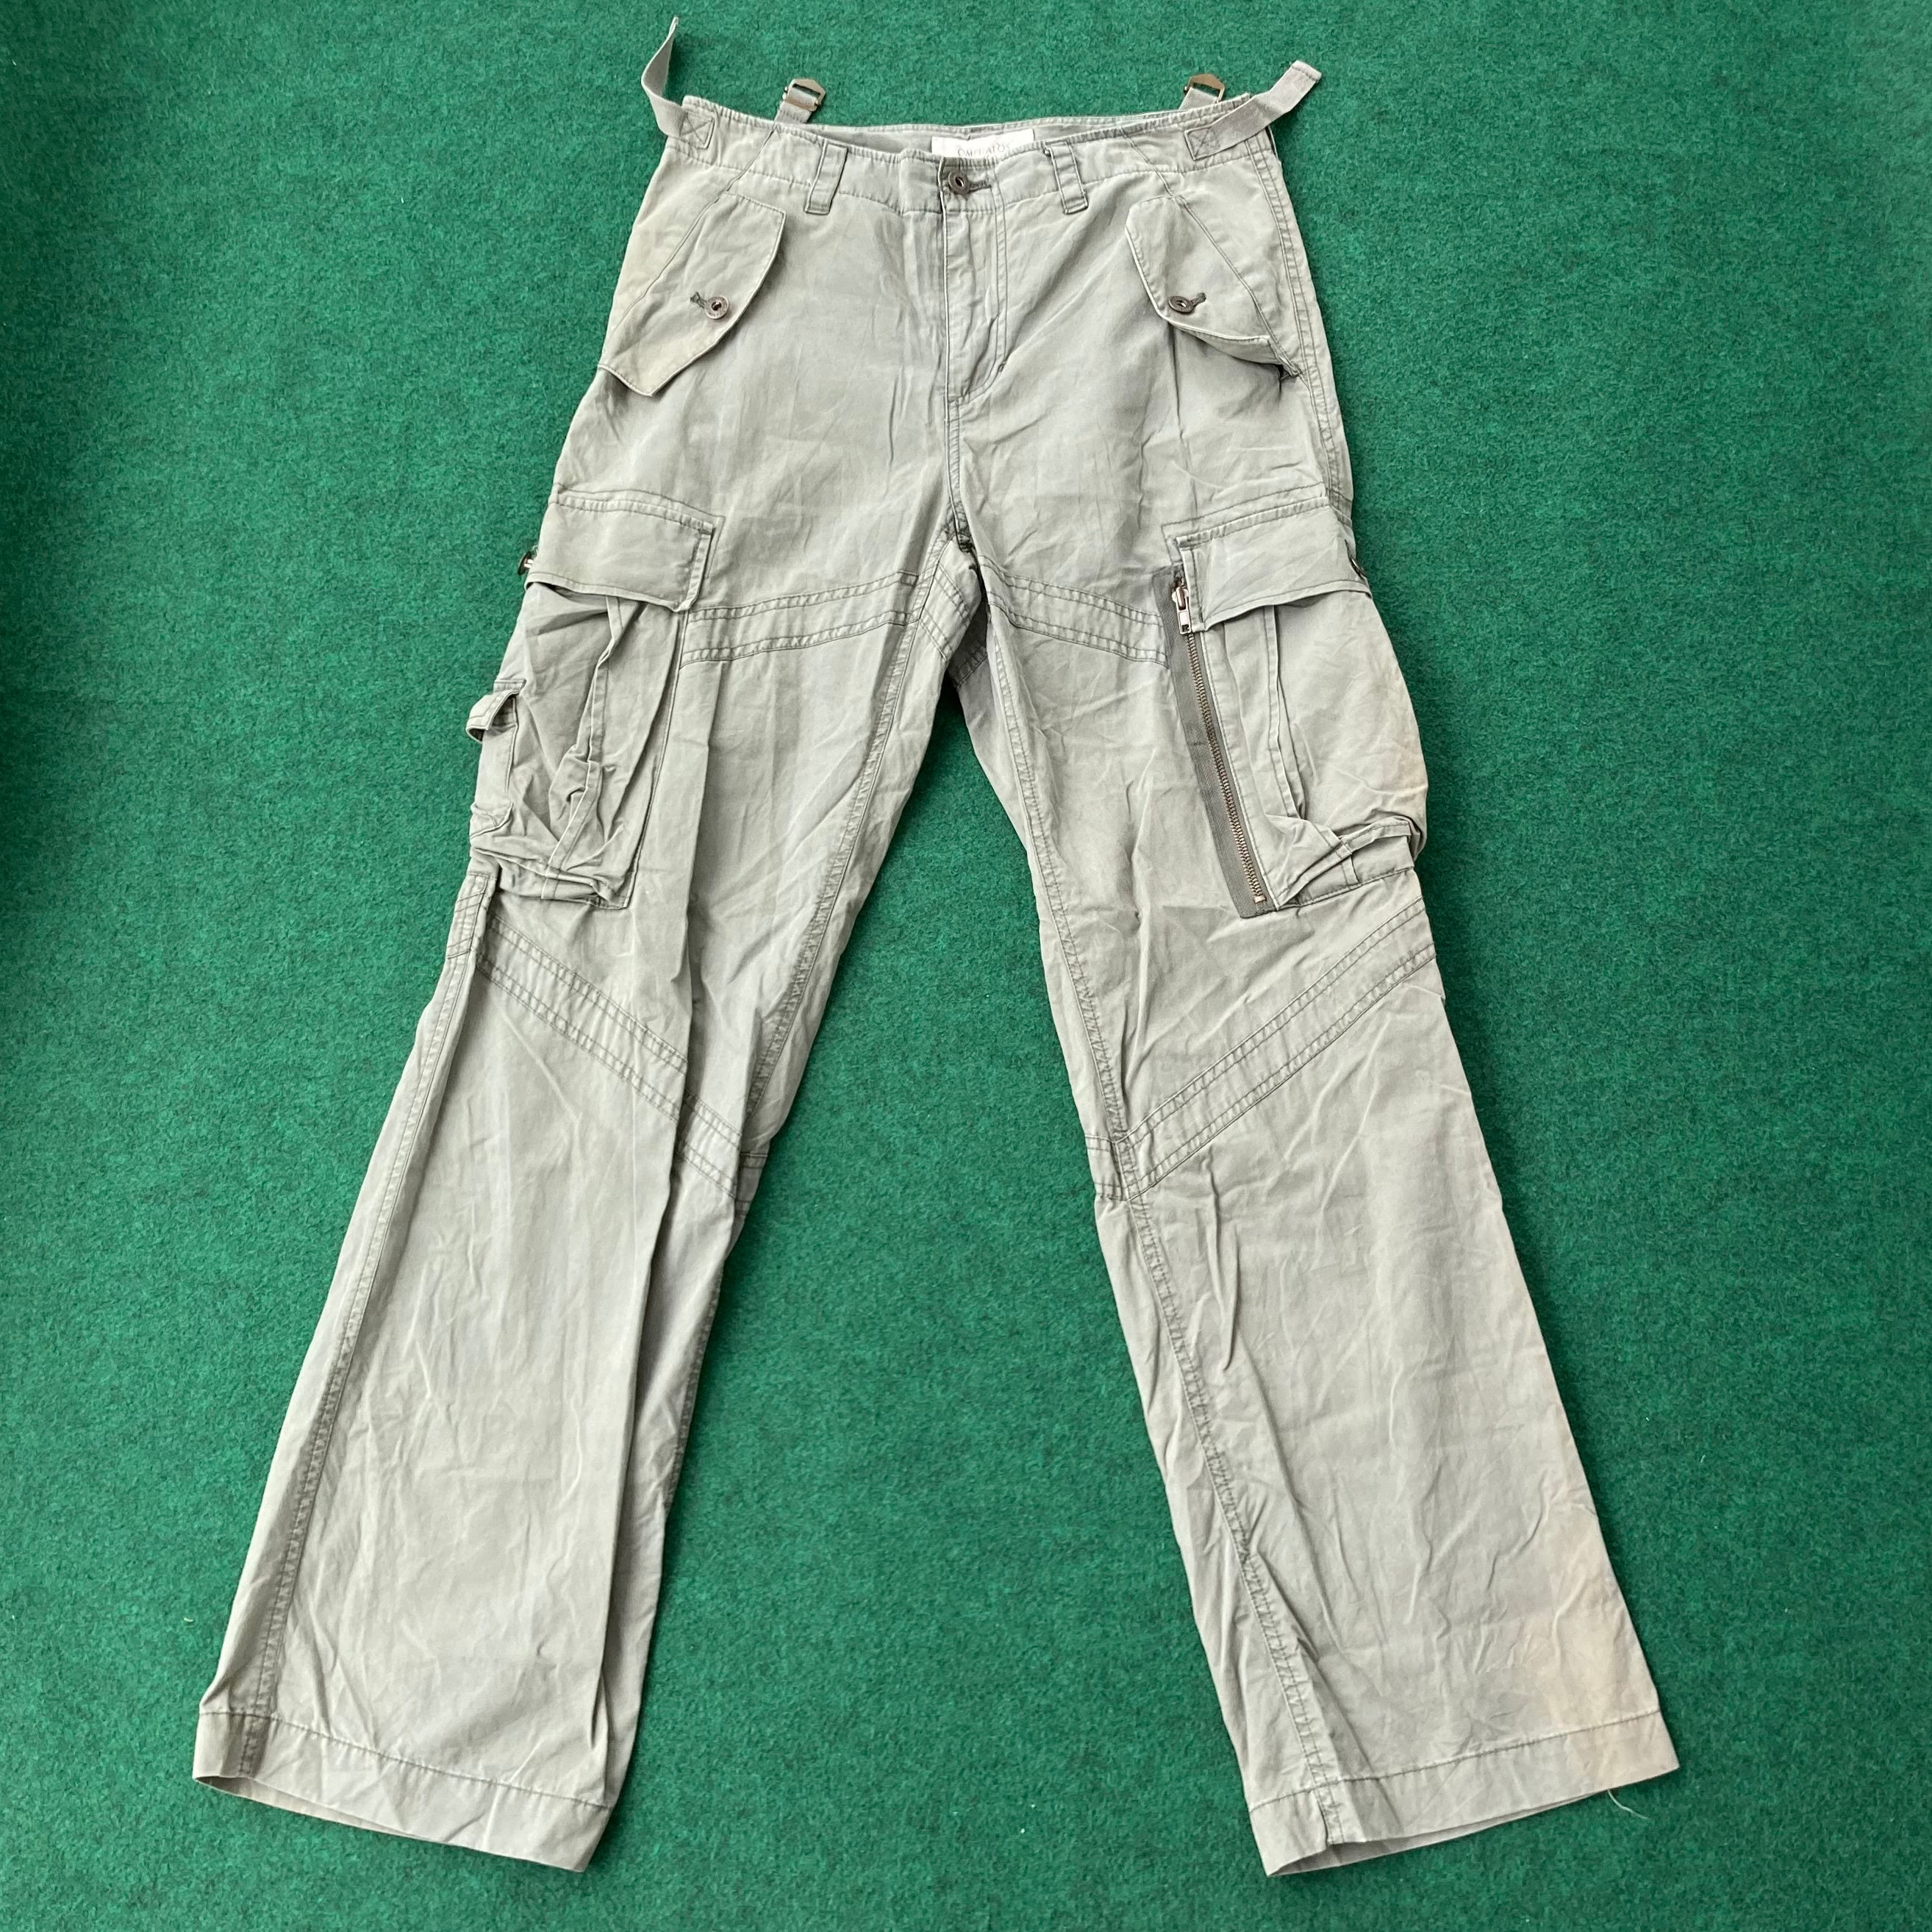 Chinause pocket styles  Mens pants fashion Fashion pants Work trousers